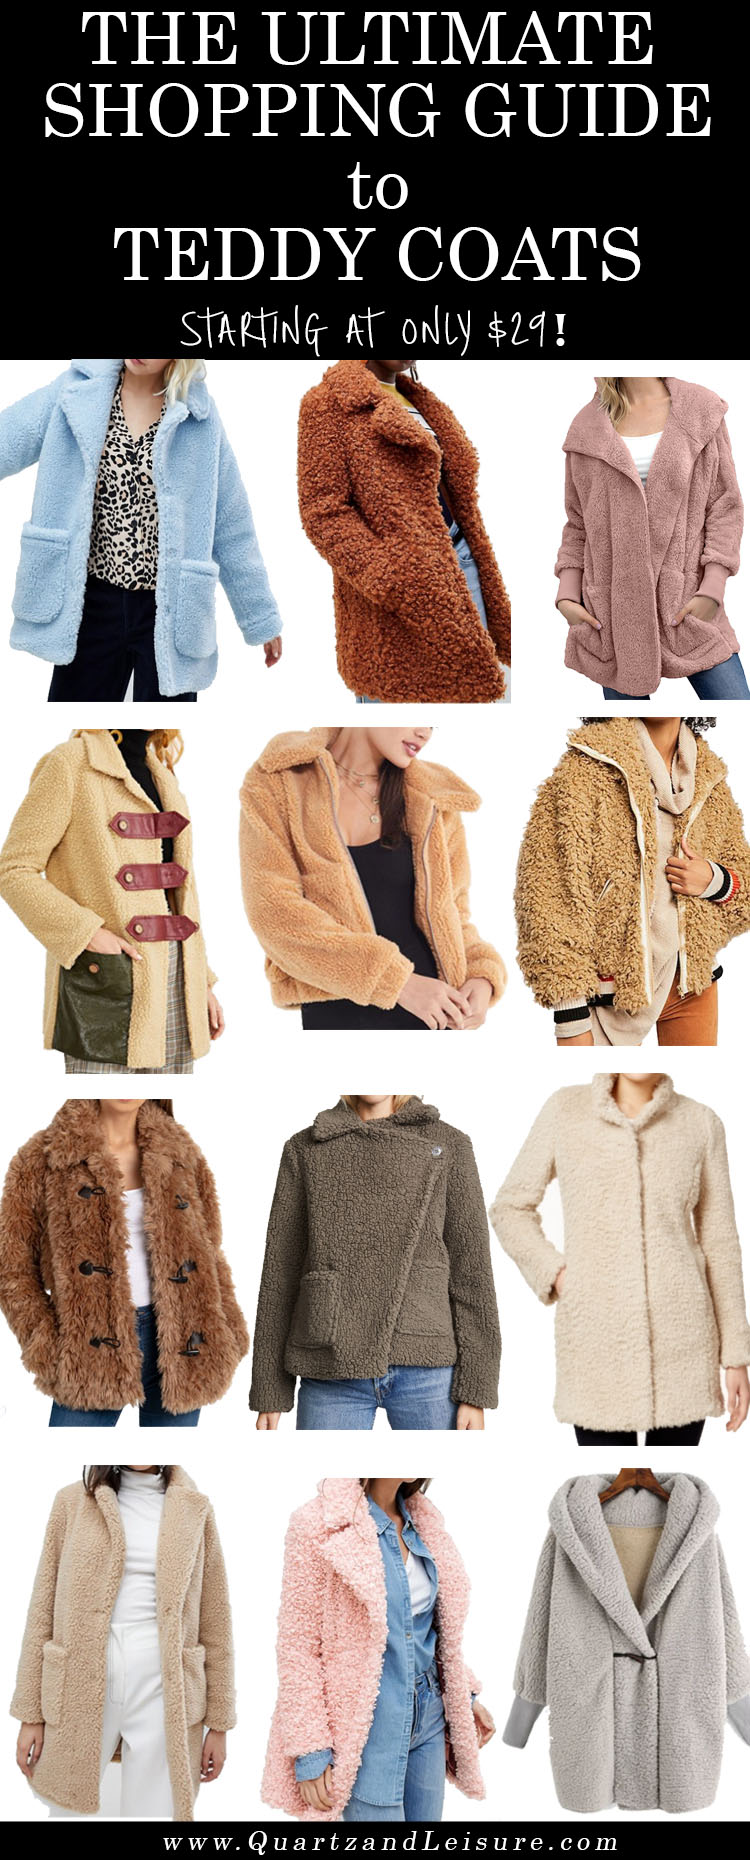 Teddy Coats, Teddy Bear Coats, Urban Outfitters Teddy Coat